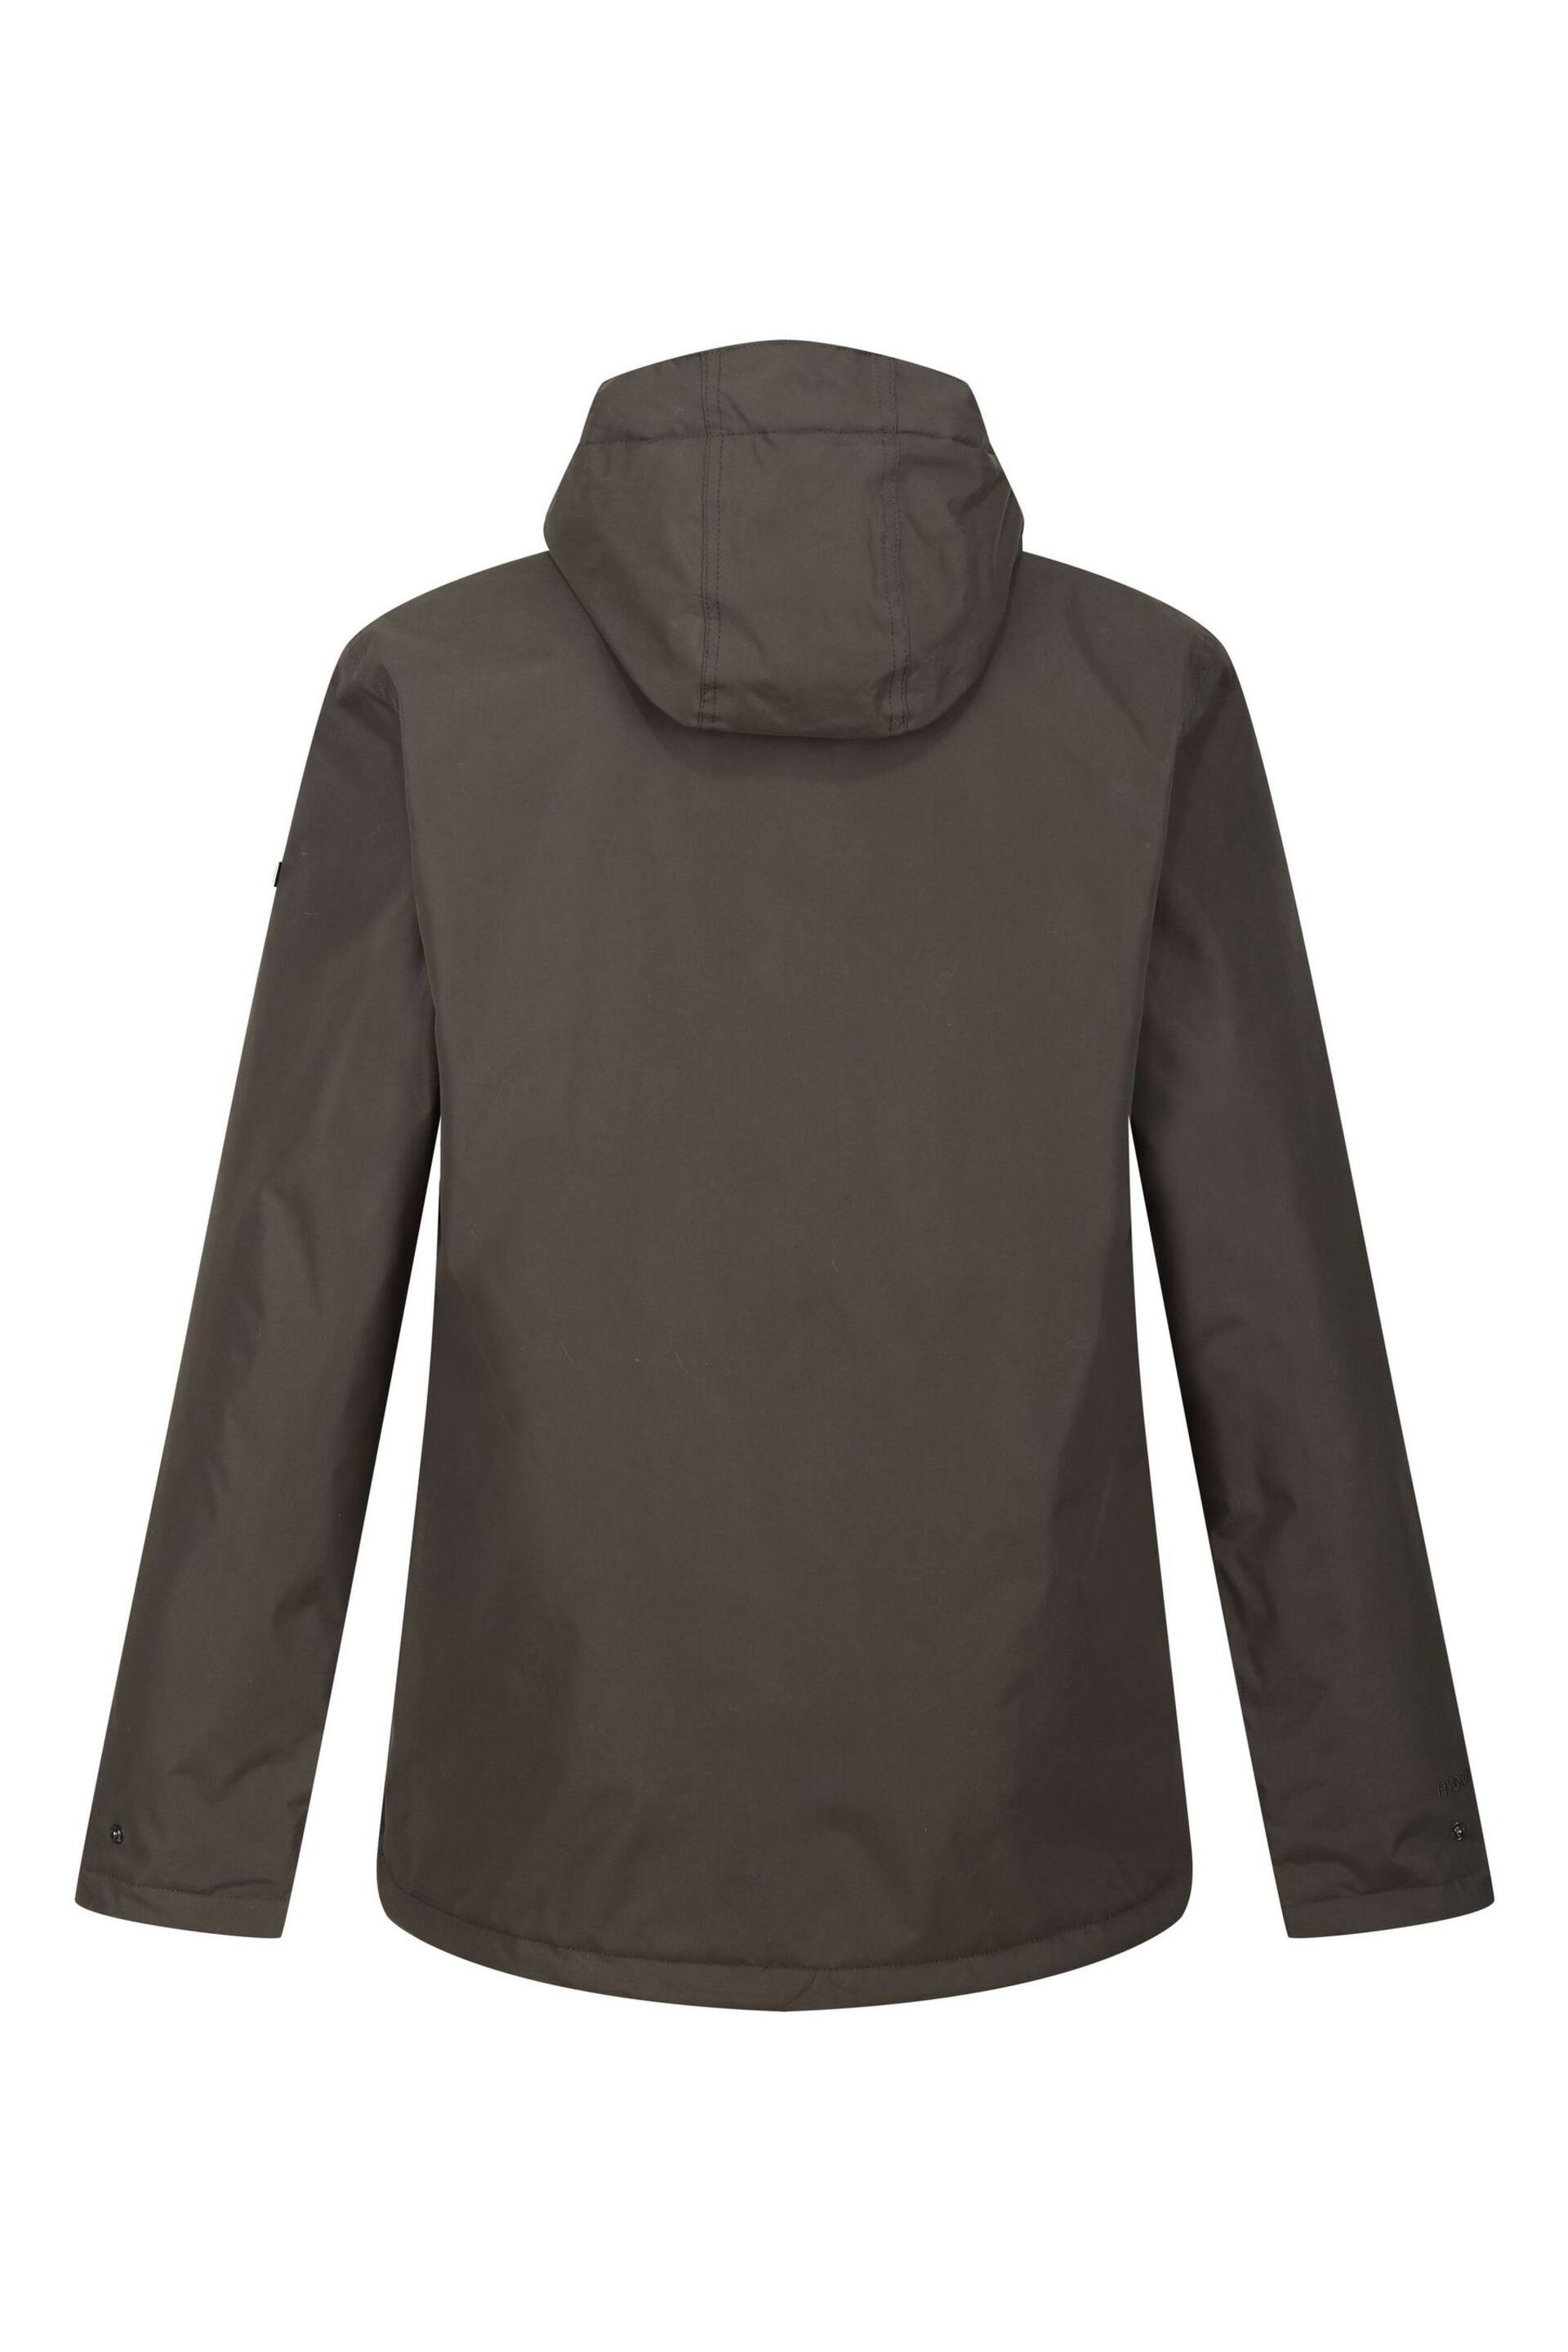 Regatta Green Broadia Waterproof Thermal Insulated Jacket - Image 8 of 8